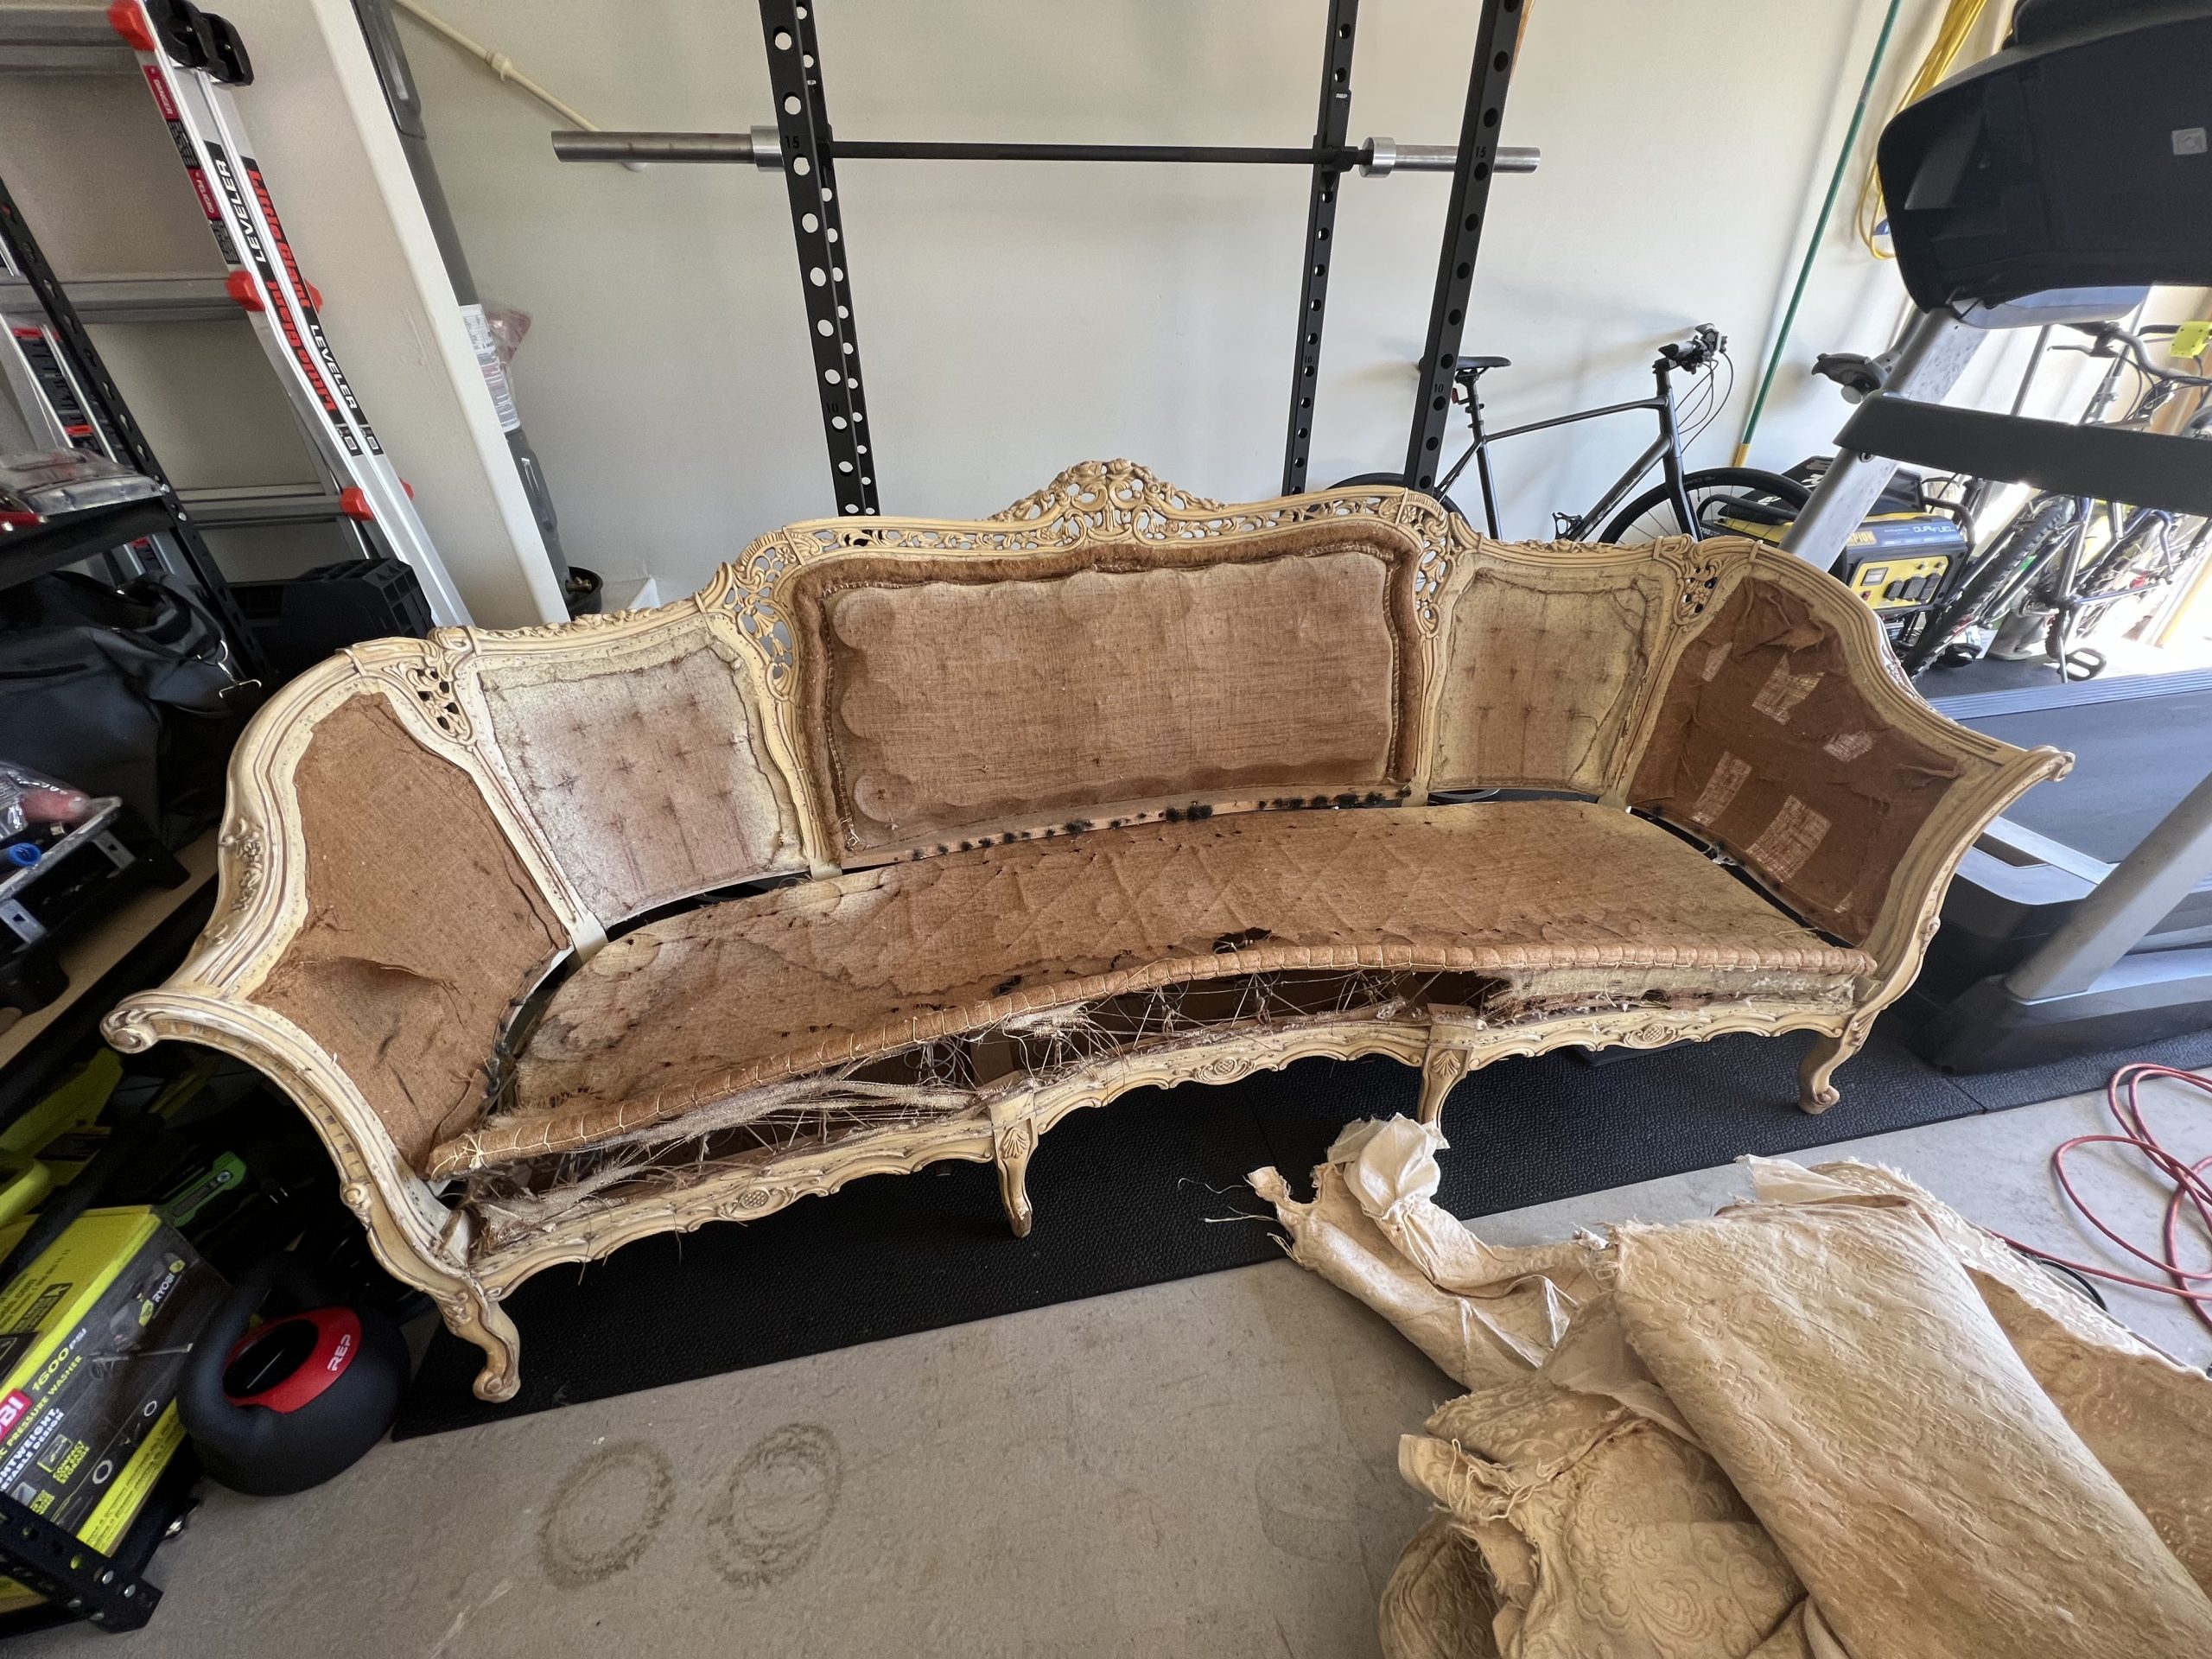 deconstructing antique couch